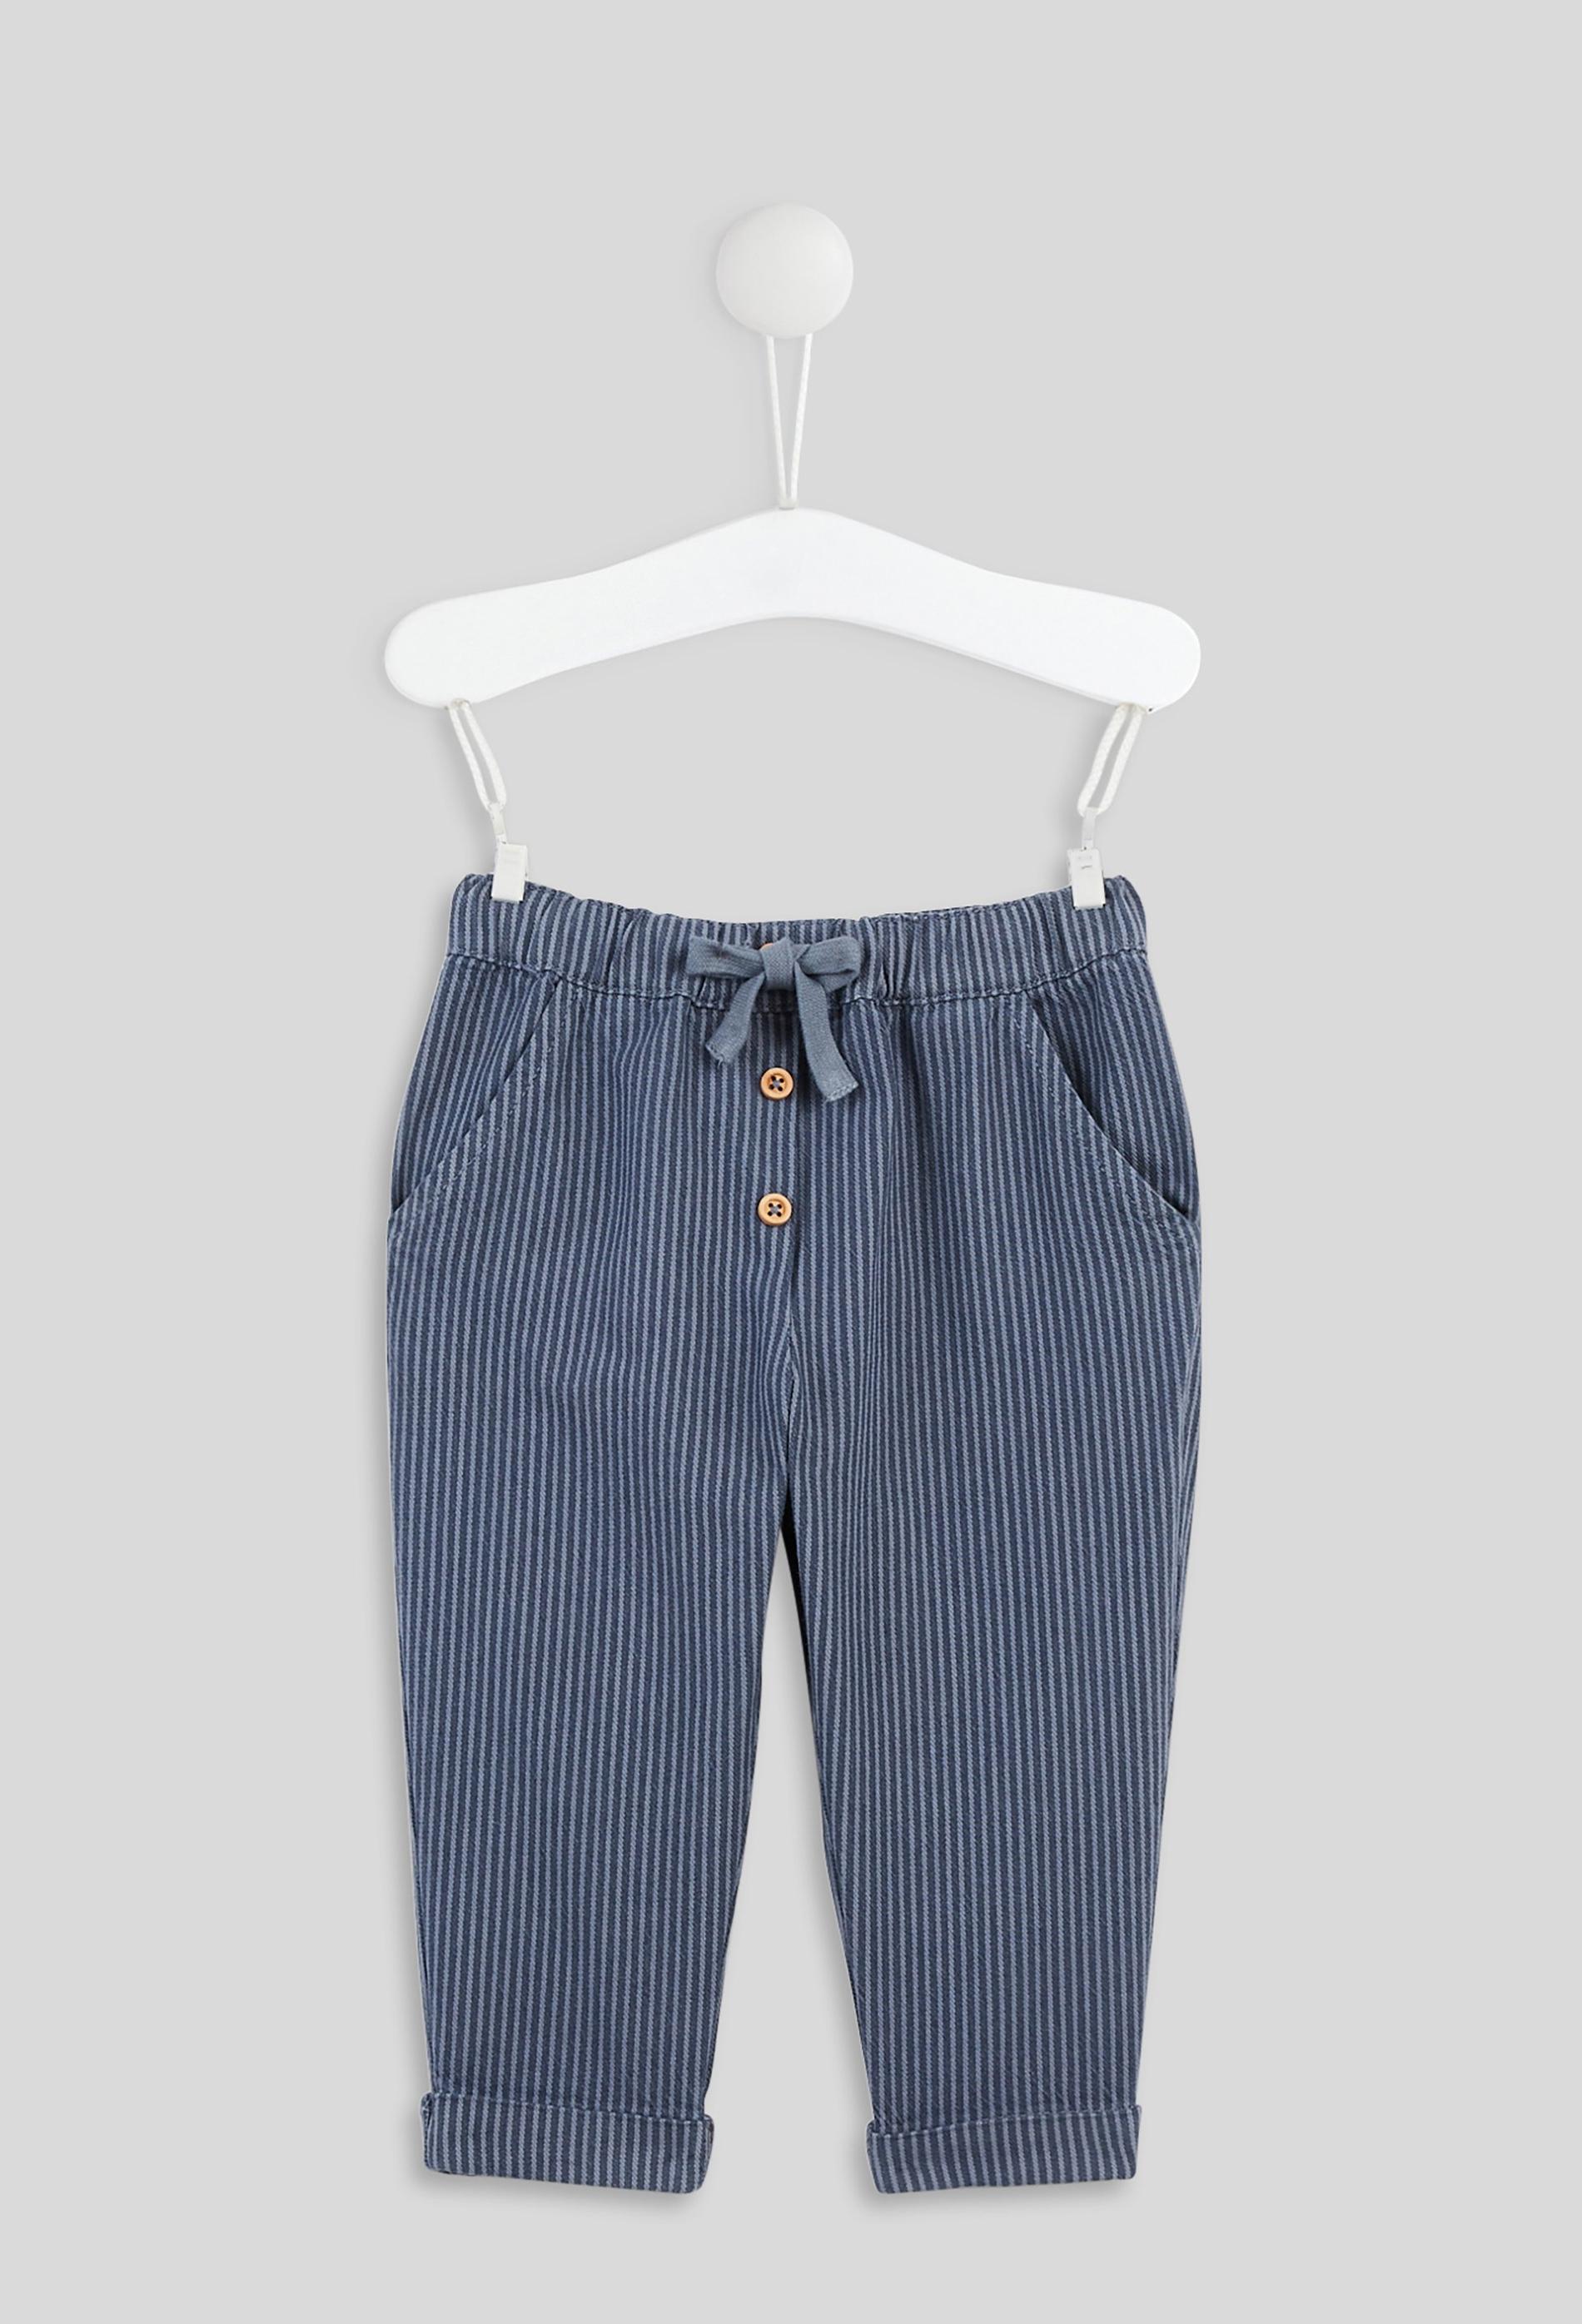 Pantalon rayé taille élastique, garçon, OEKO-TEX 18 mois bleu